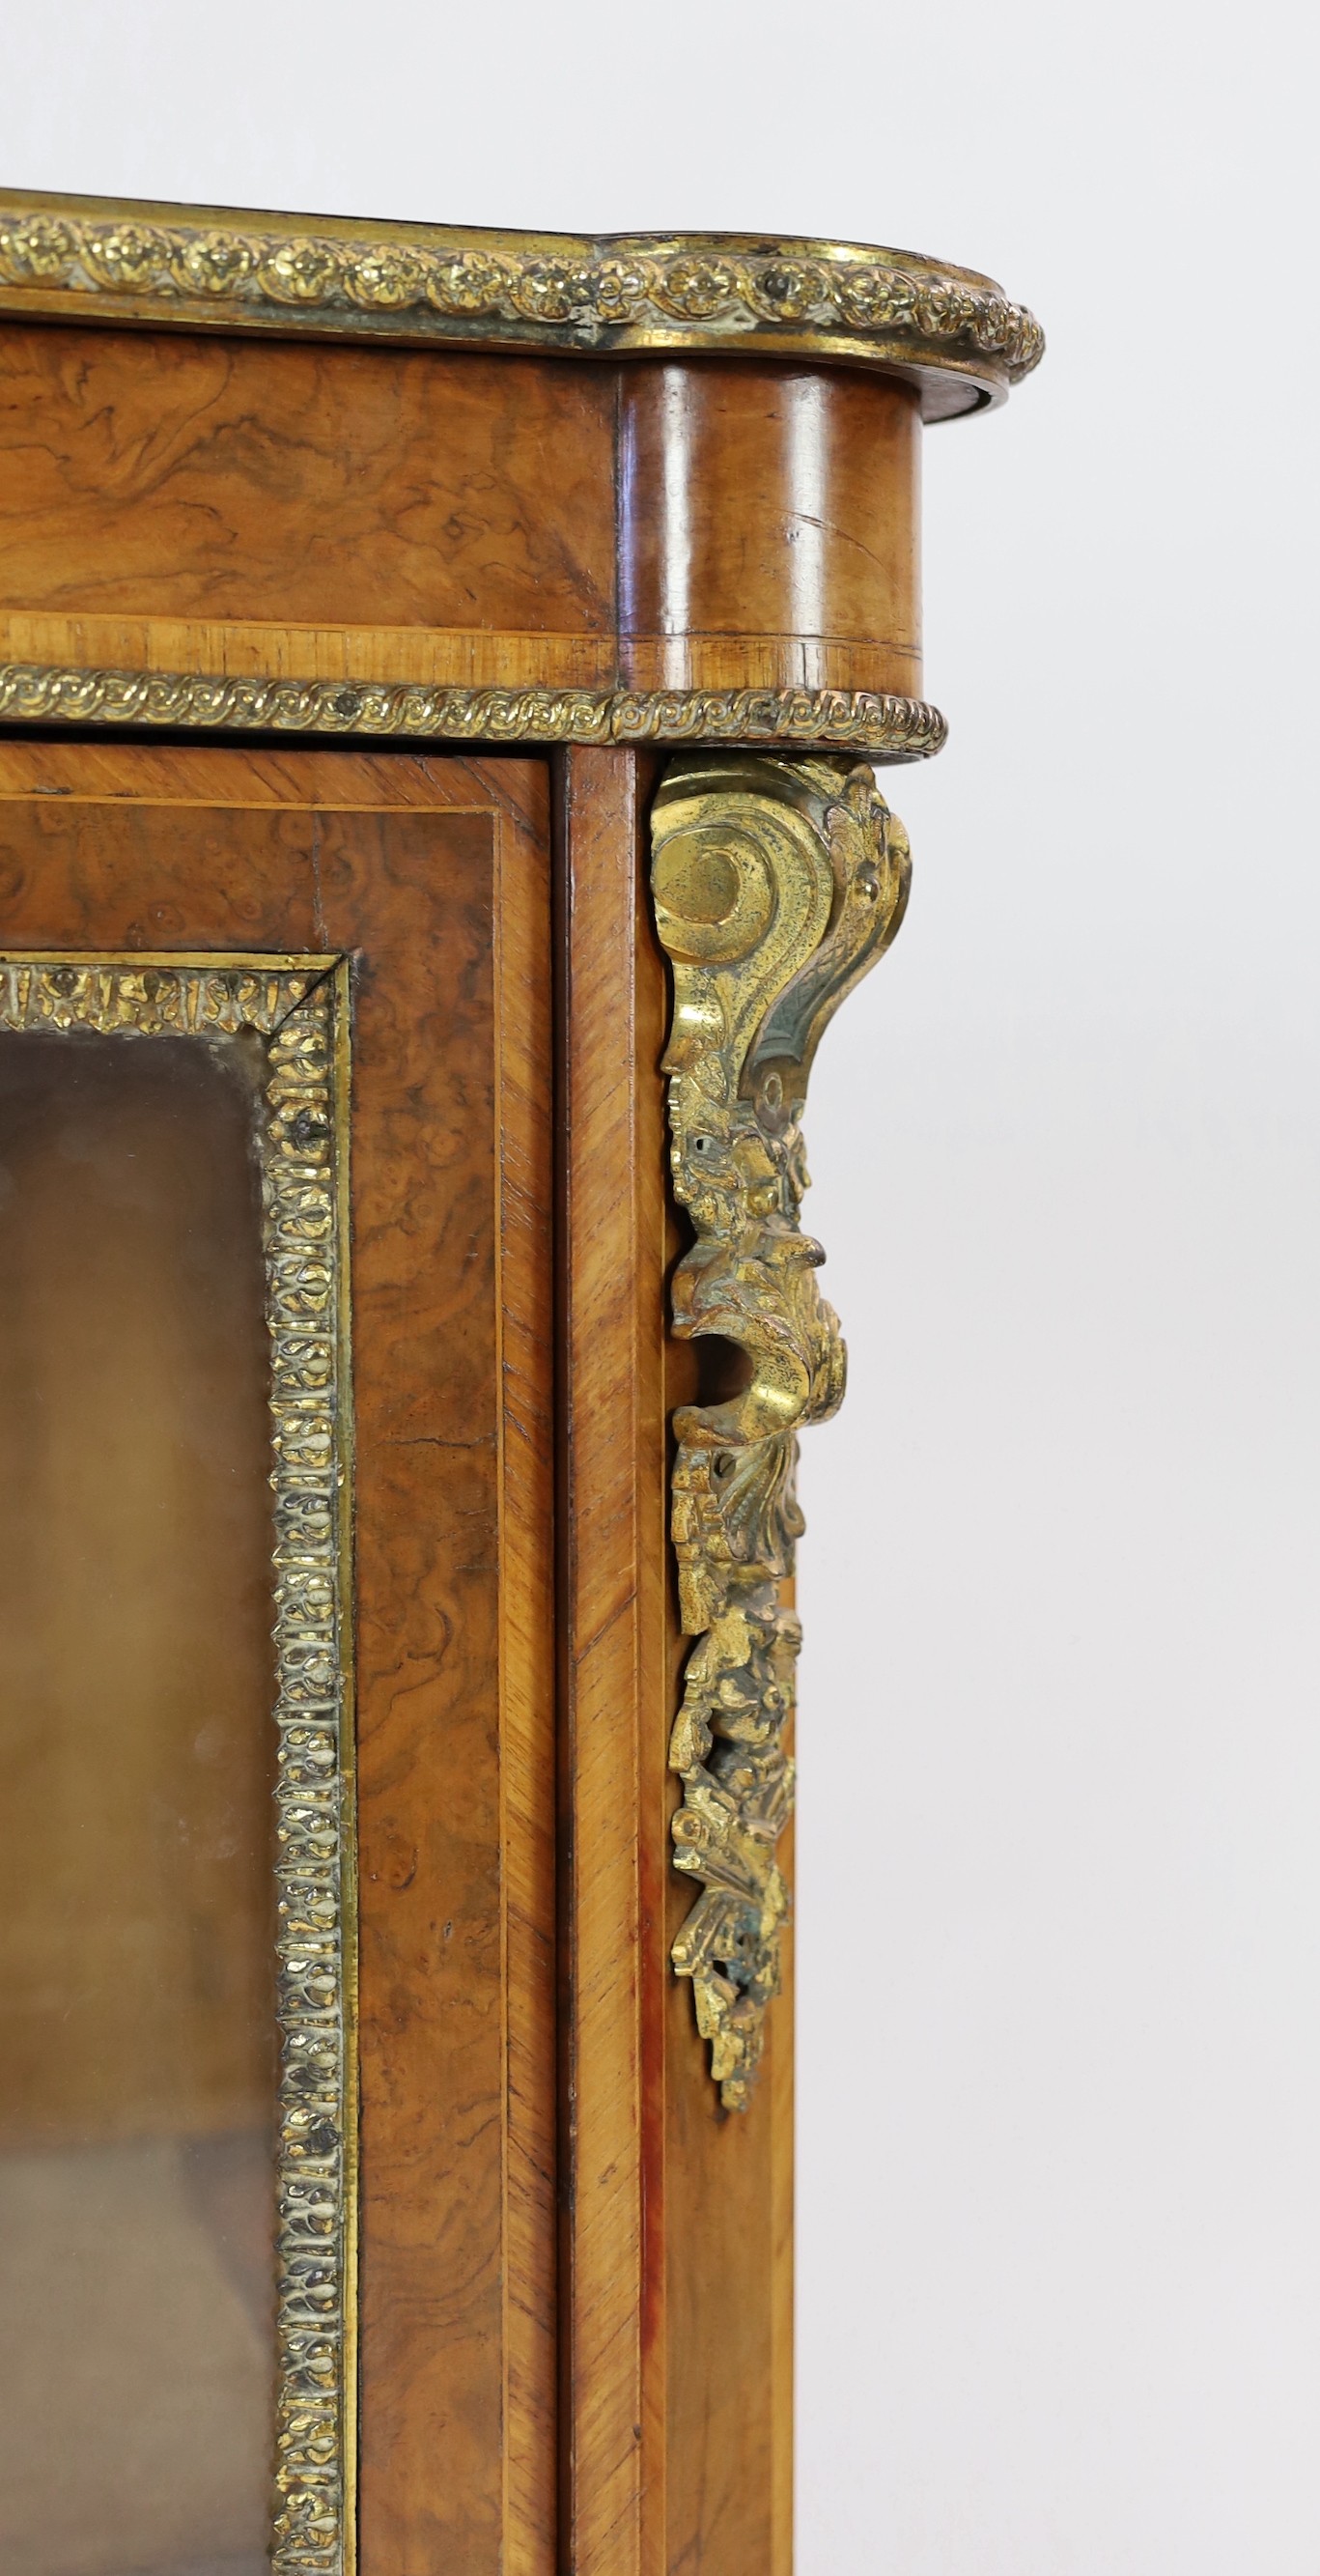 A 19th century French ormolu mounted figured walnut pier cabinet, width 90cm depth 40cm height 114cm